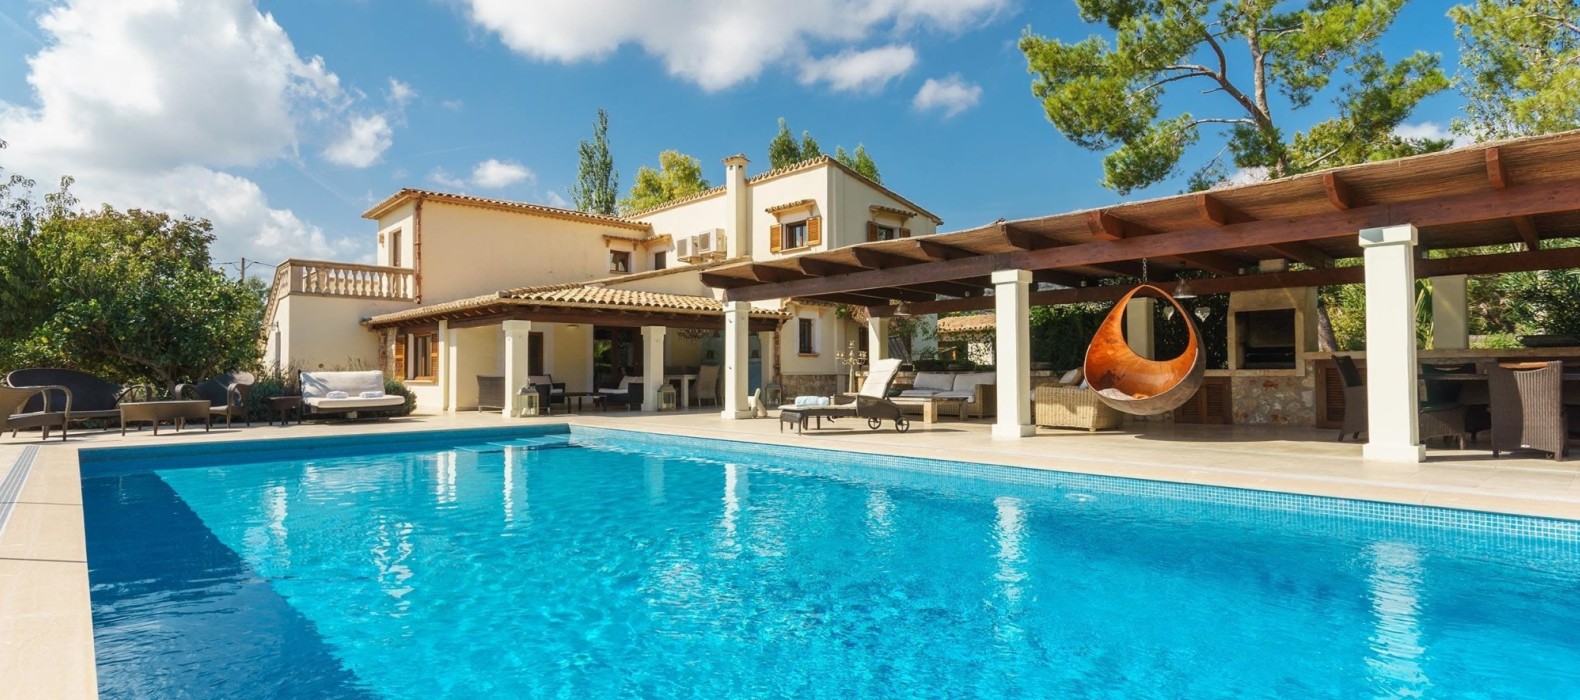 Outdoor pool area of Villa Two M2 in Mallorca